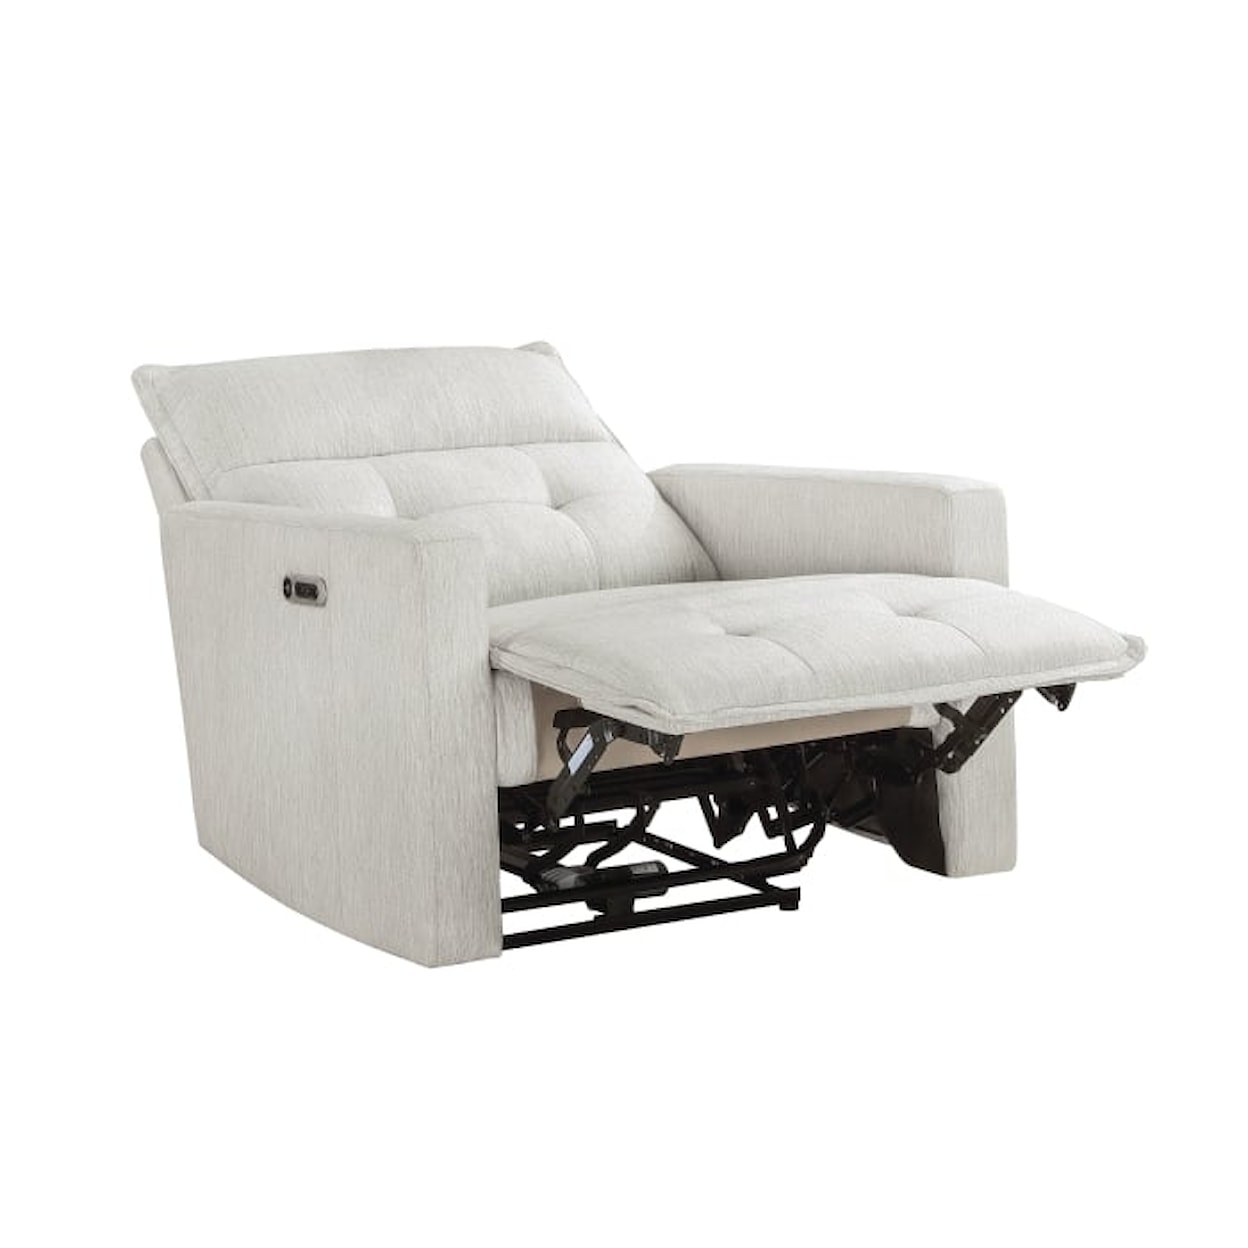 Homelegance Furniture Salida Power Reclining Chair with Power Headrest